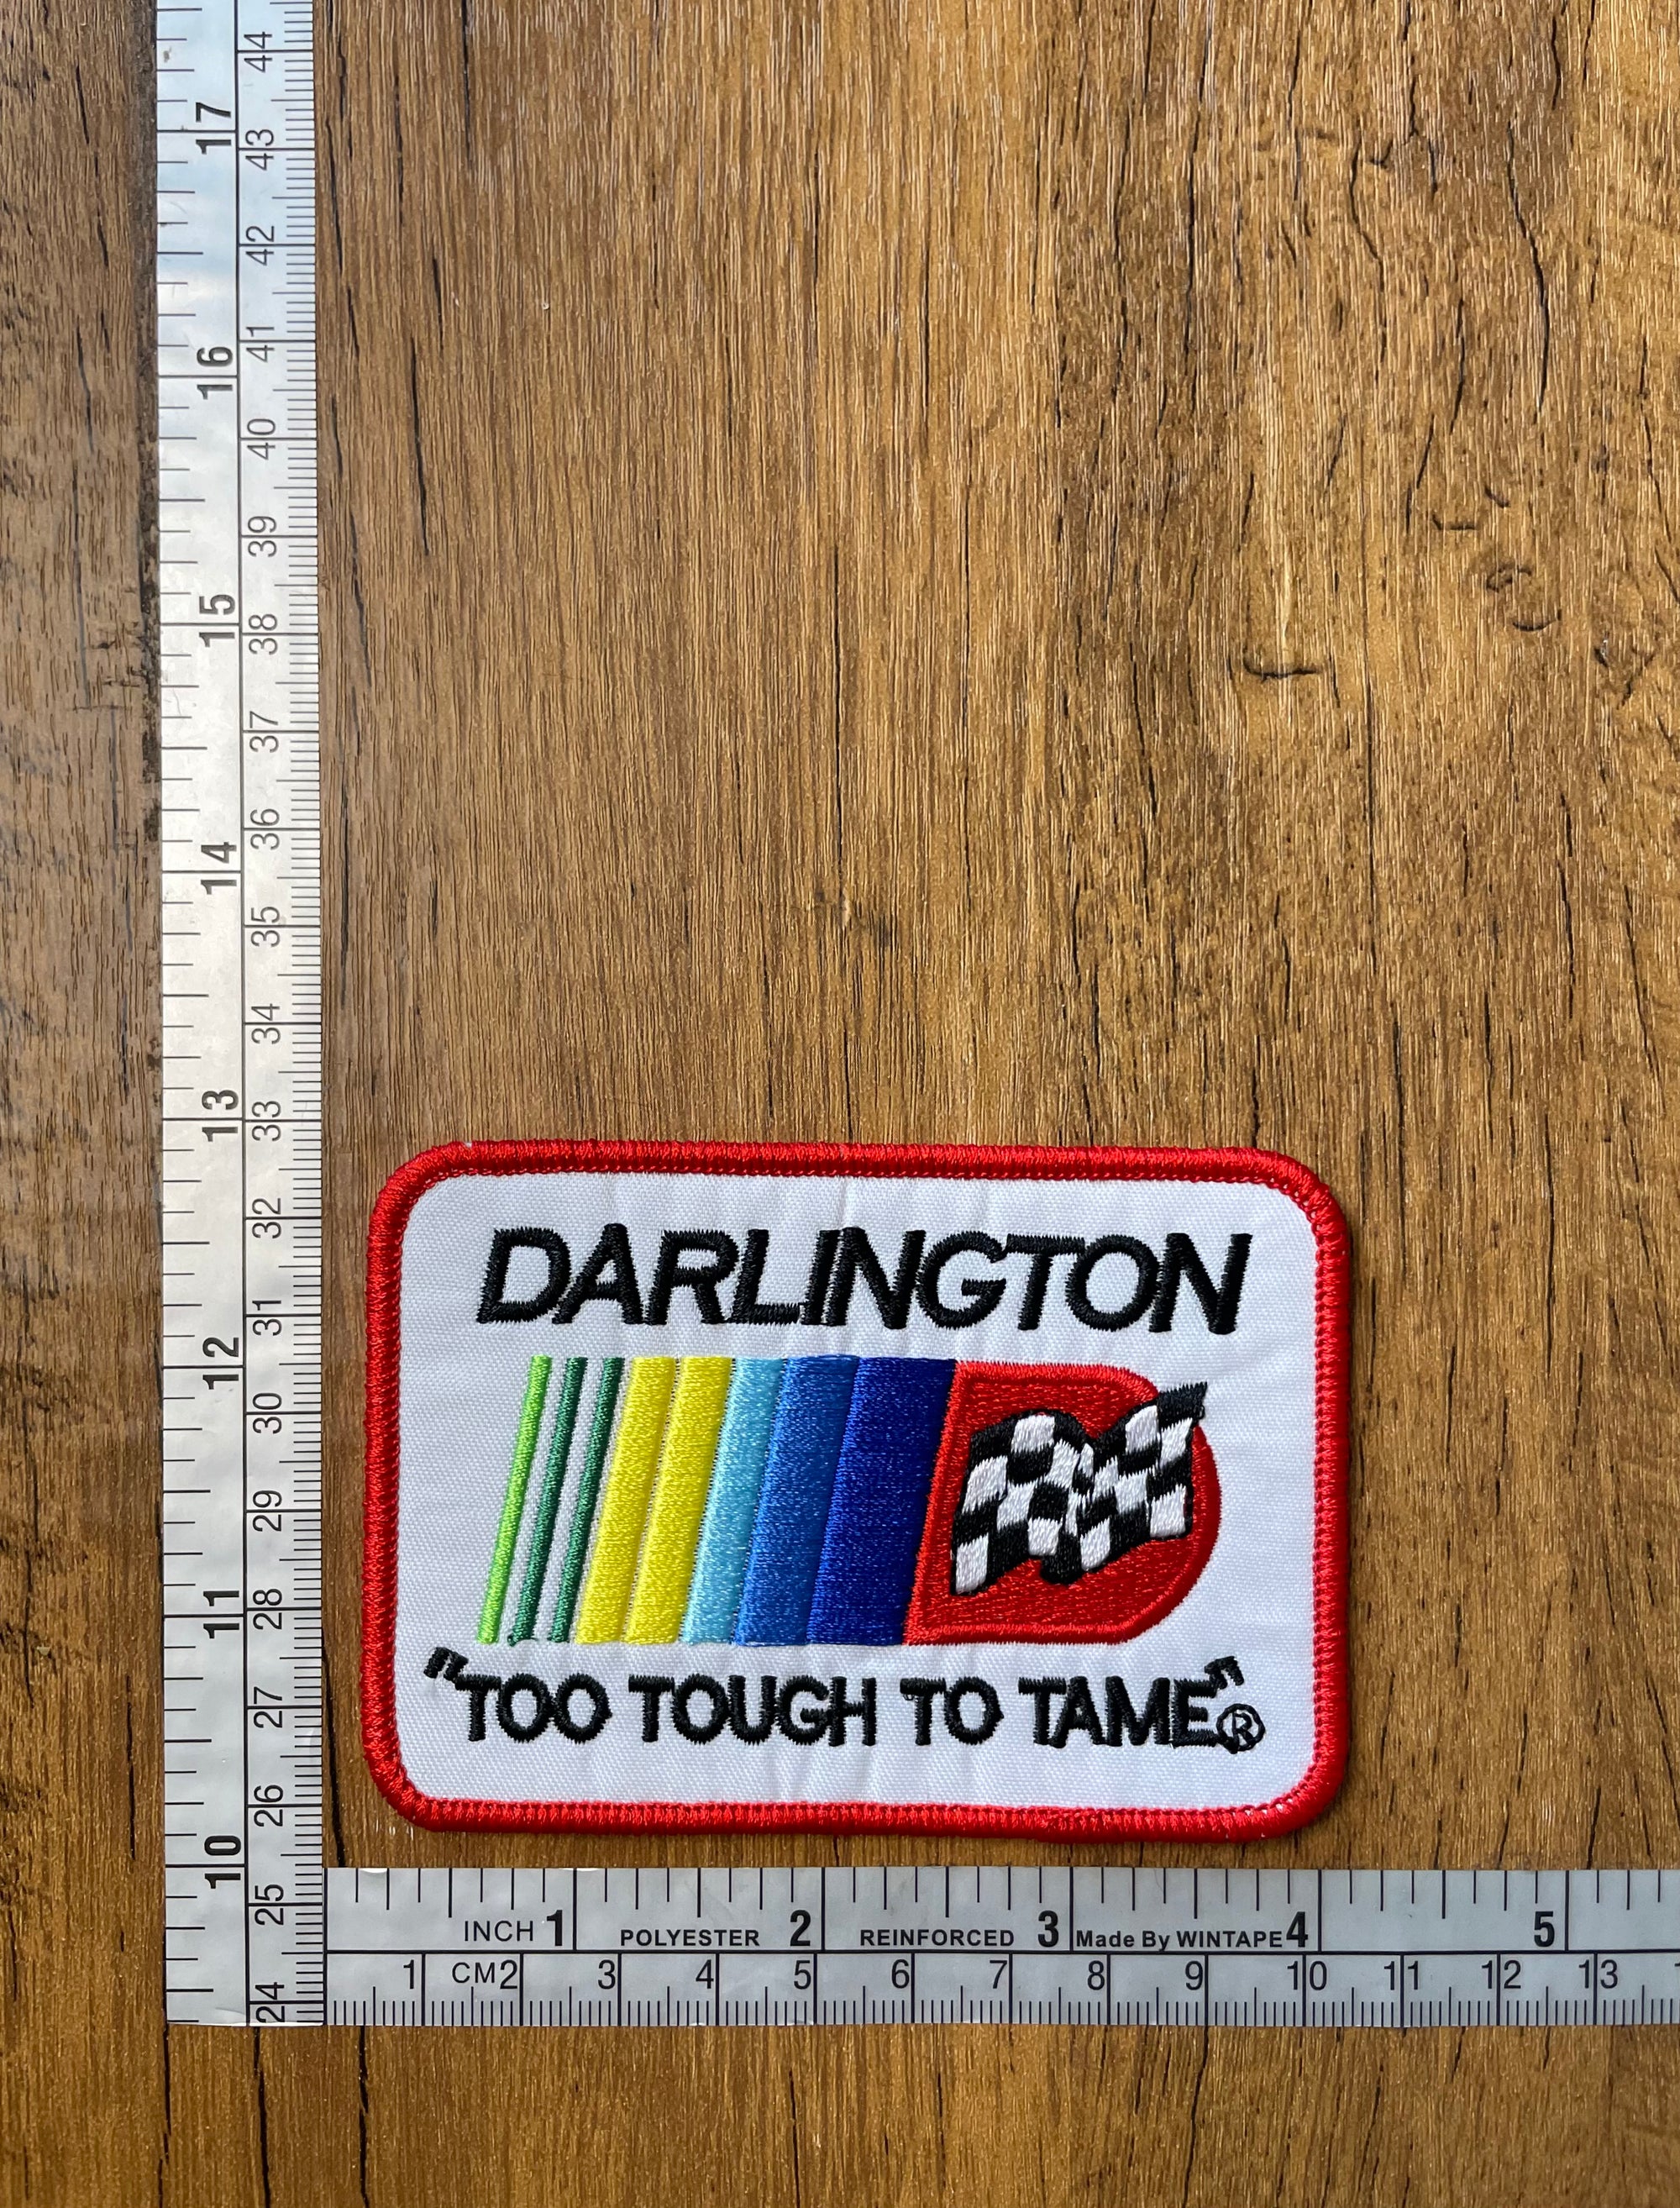 Darlington “Too Tough To Tame”